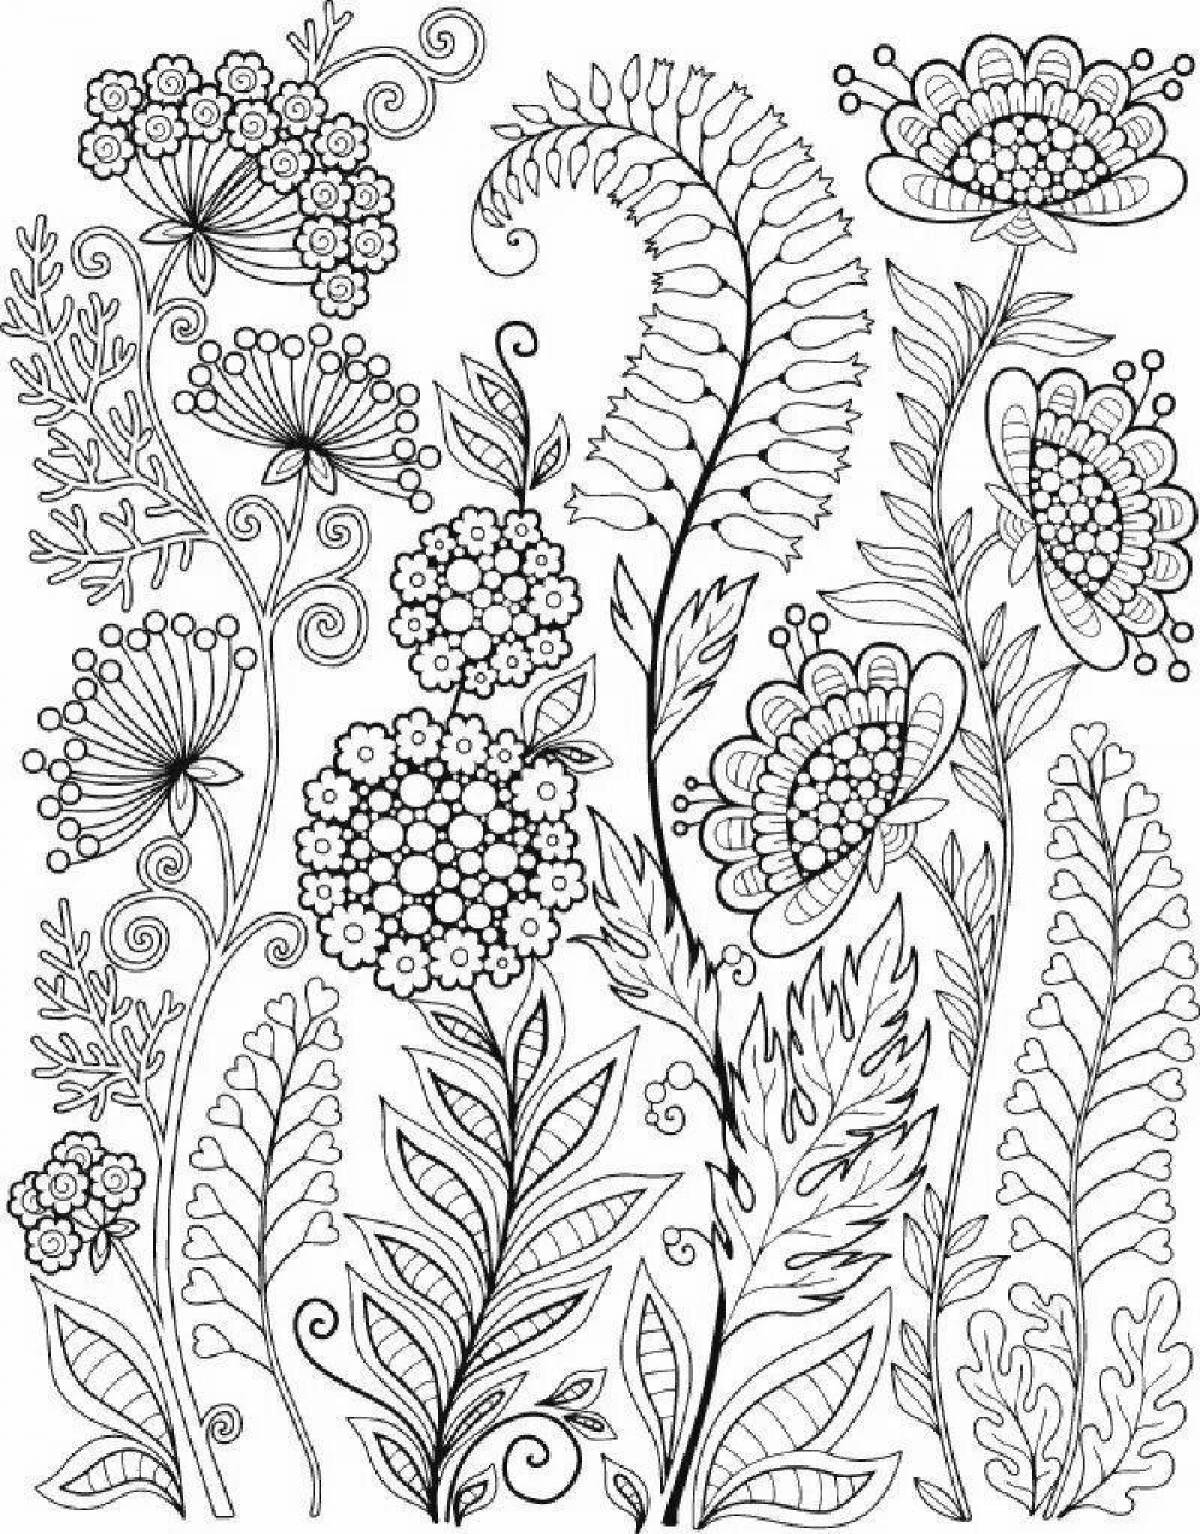 Bright botany coloring page